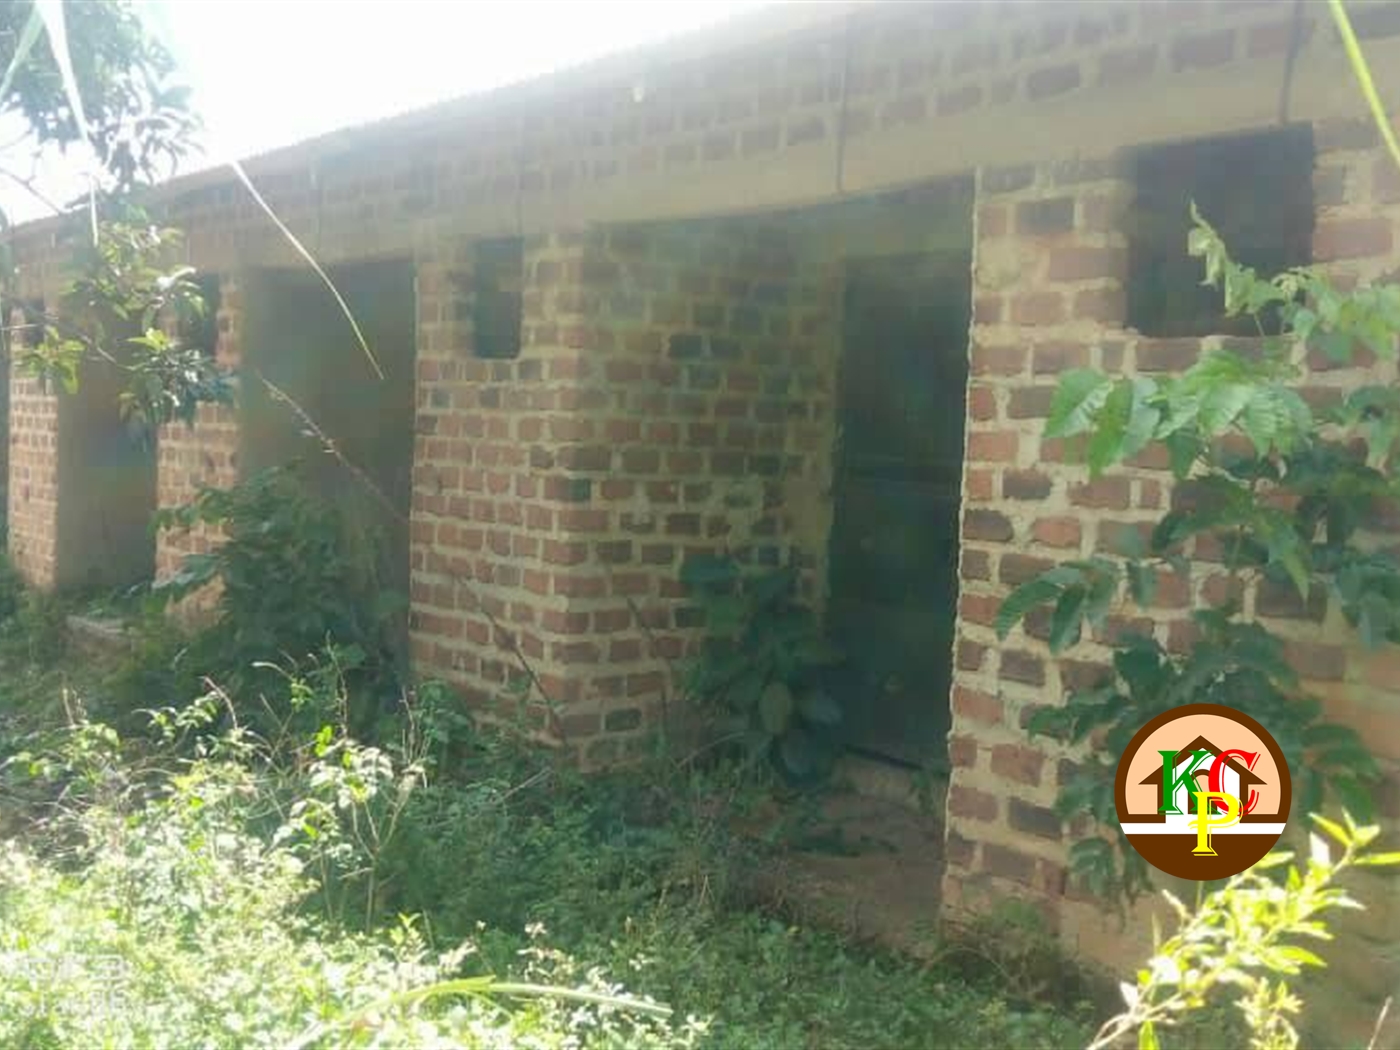 Rental units for sale in Namawojjolo Mukono